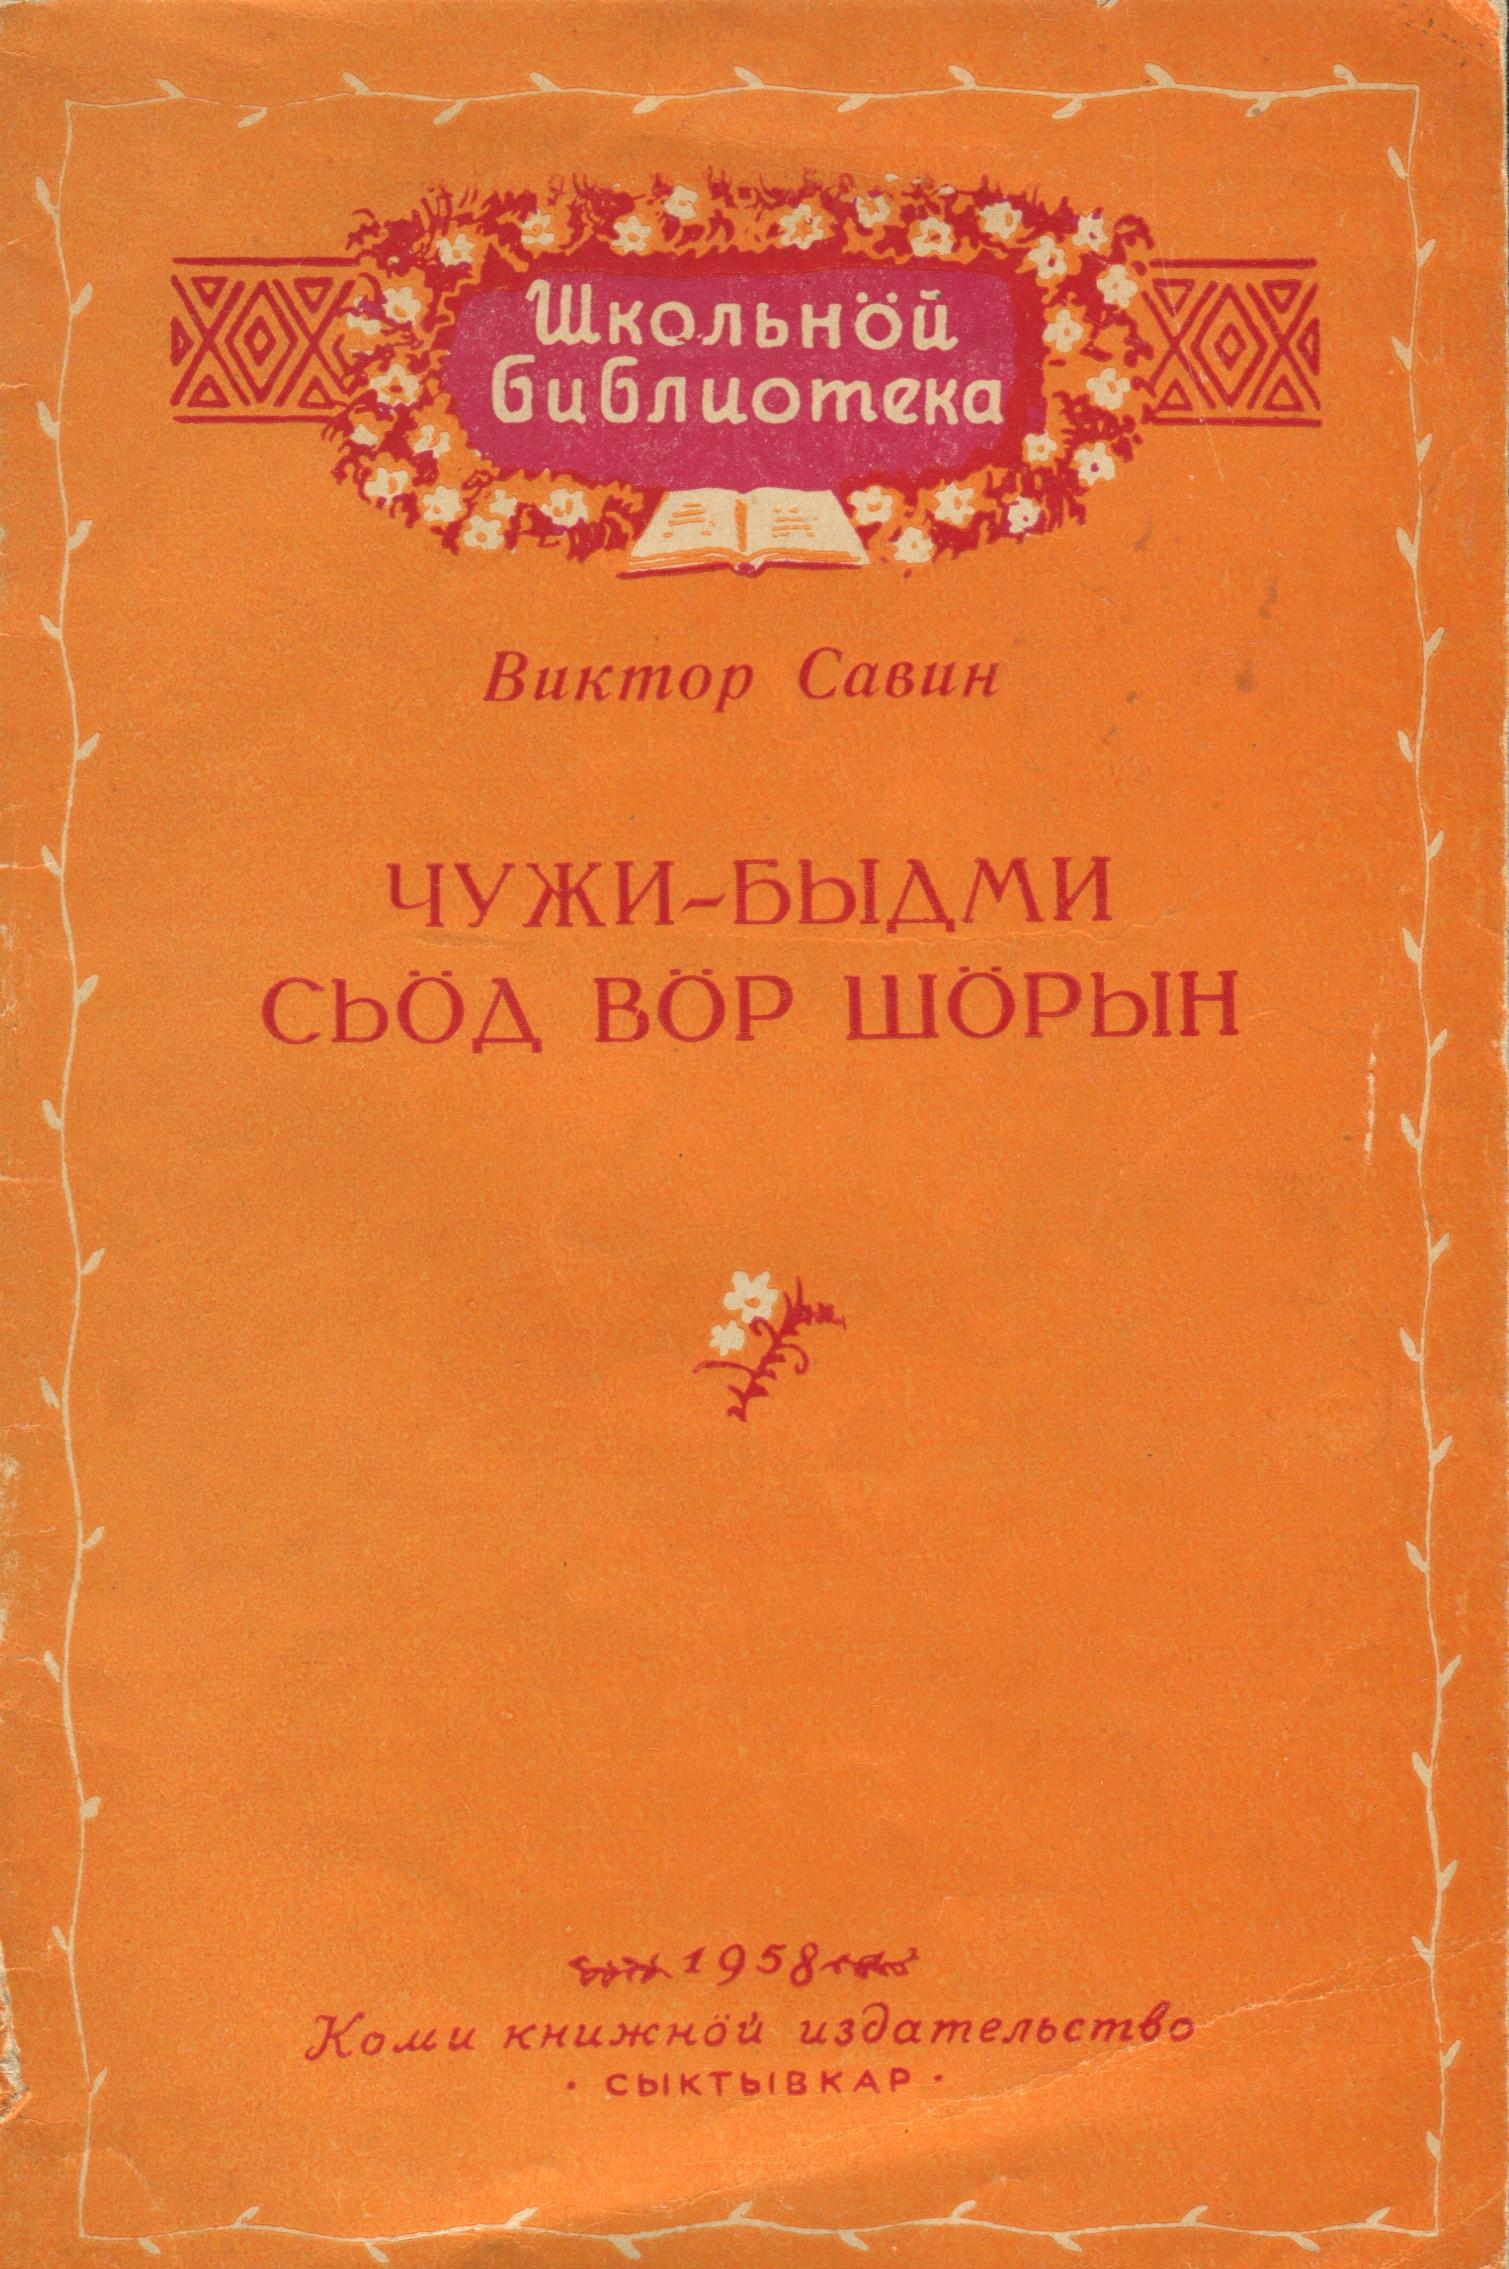 Файл:Cover nv 1958 cbsvsh.jpg